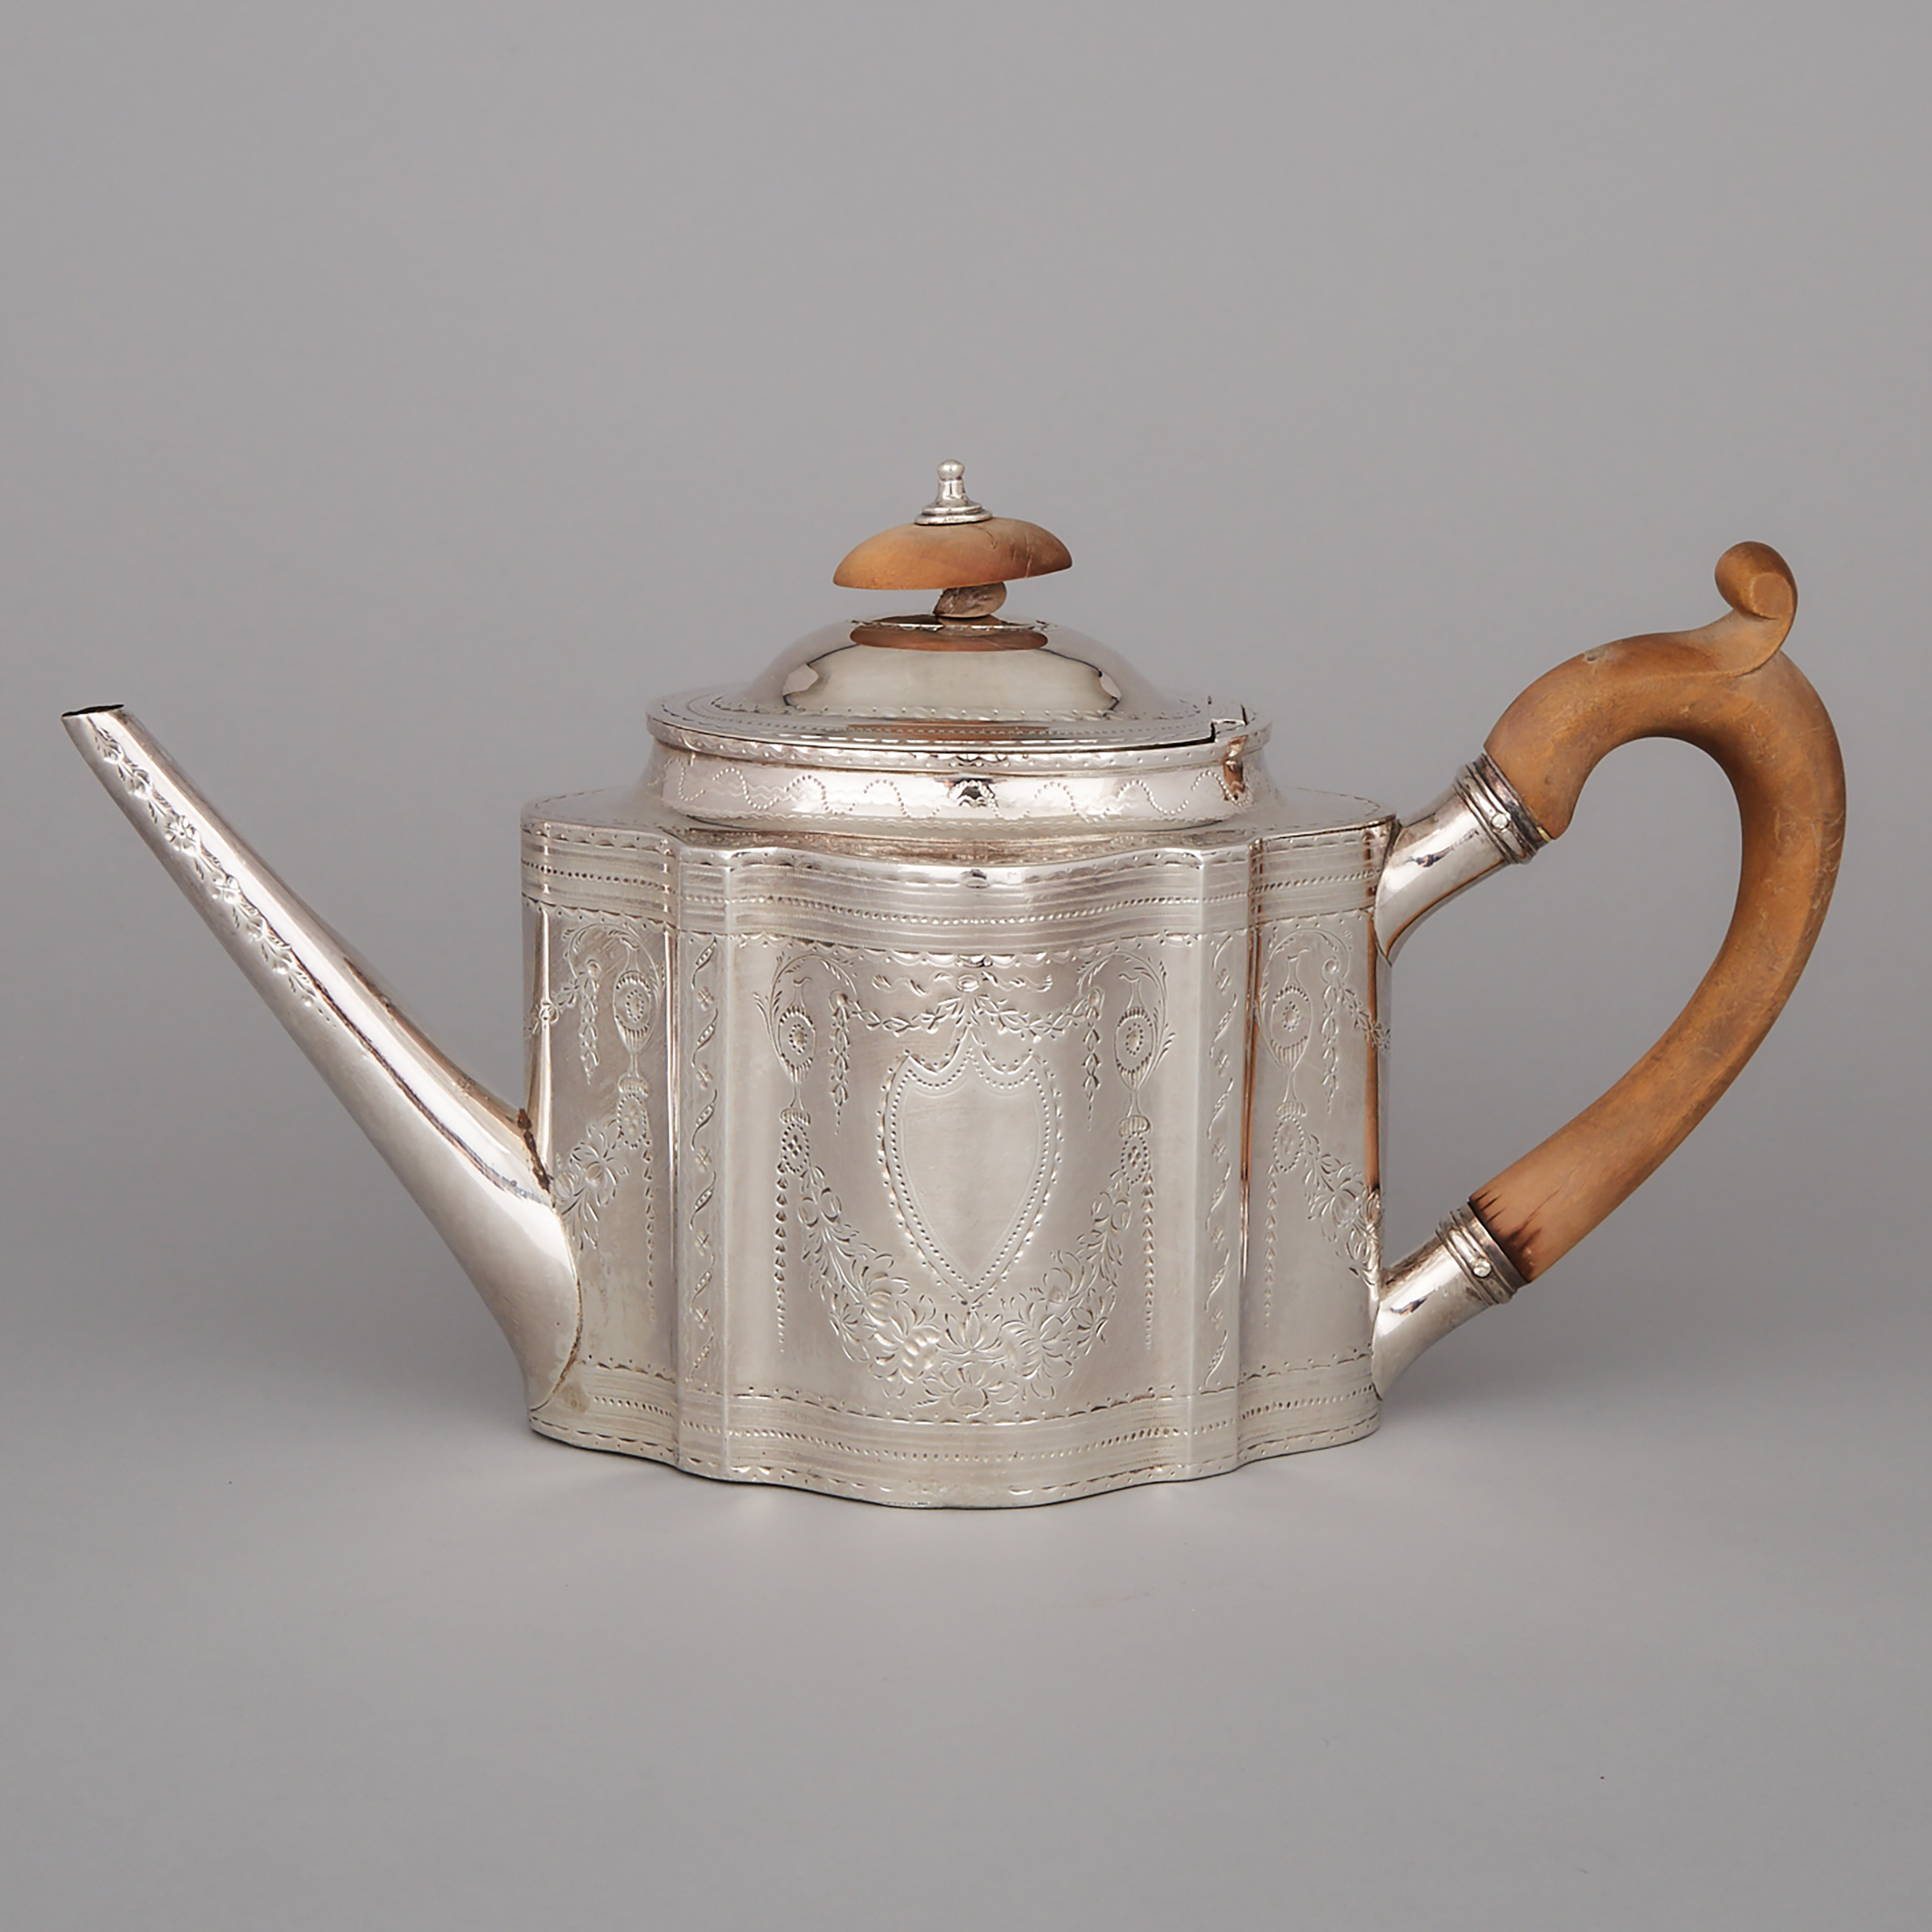 George III Silver Teapot, Robert Hennell I, London, 1784